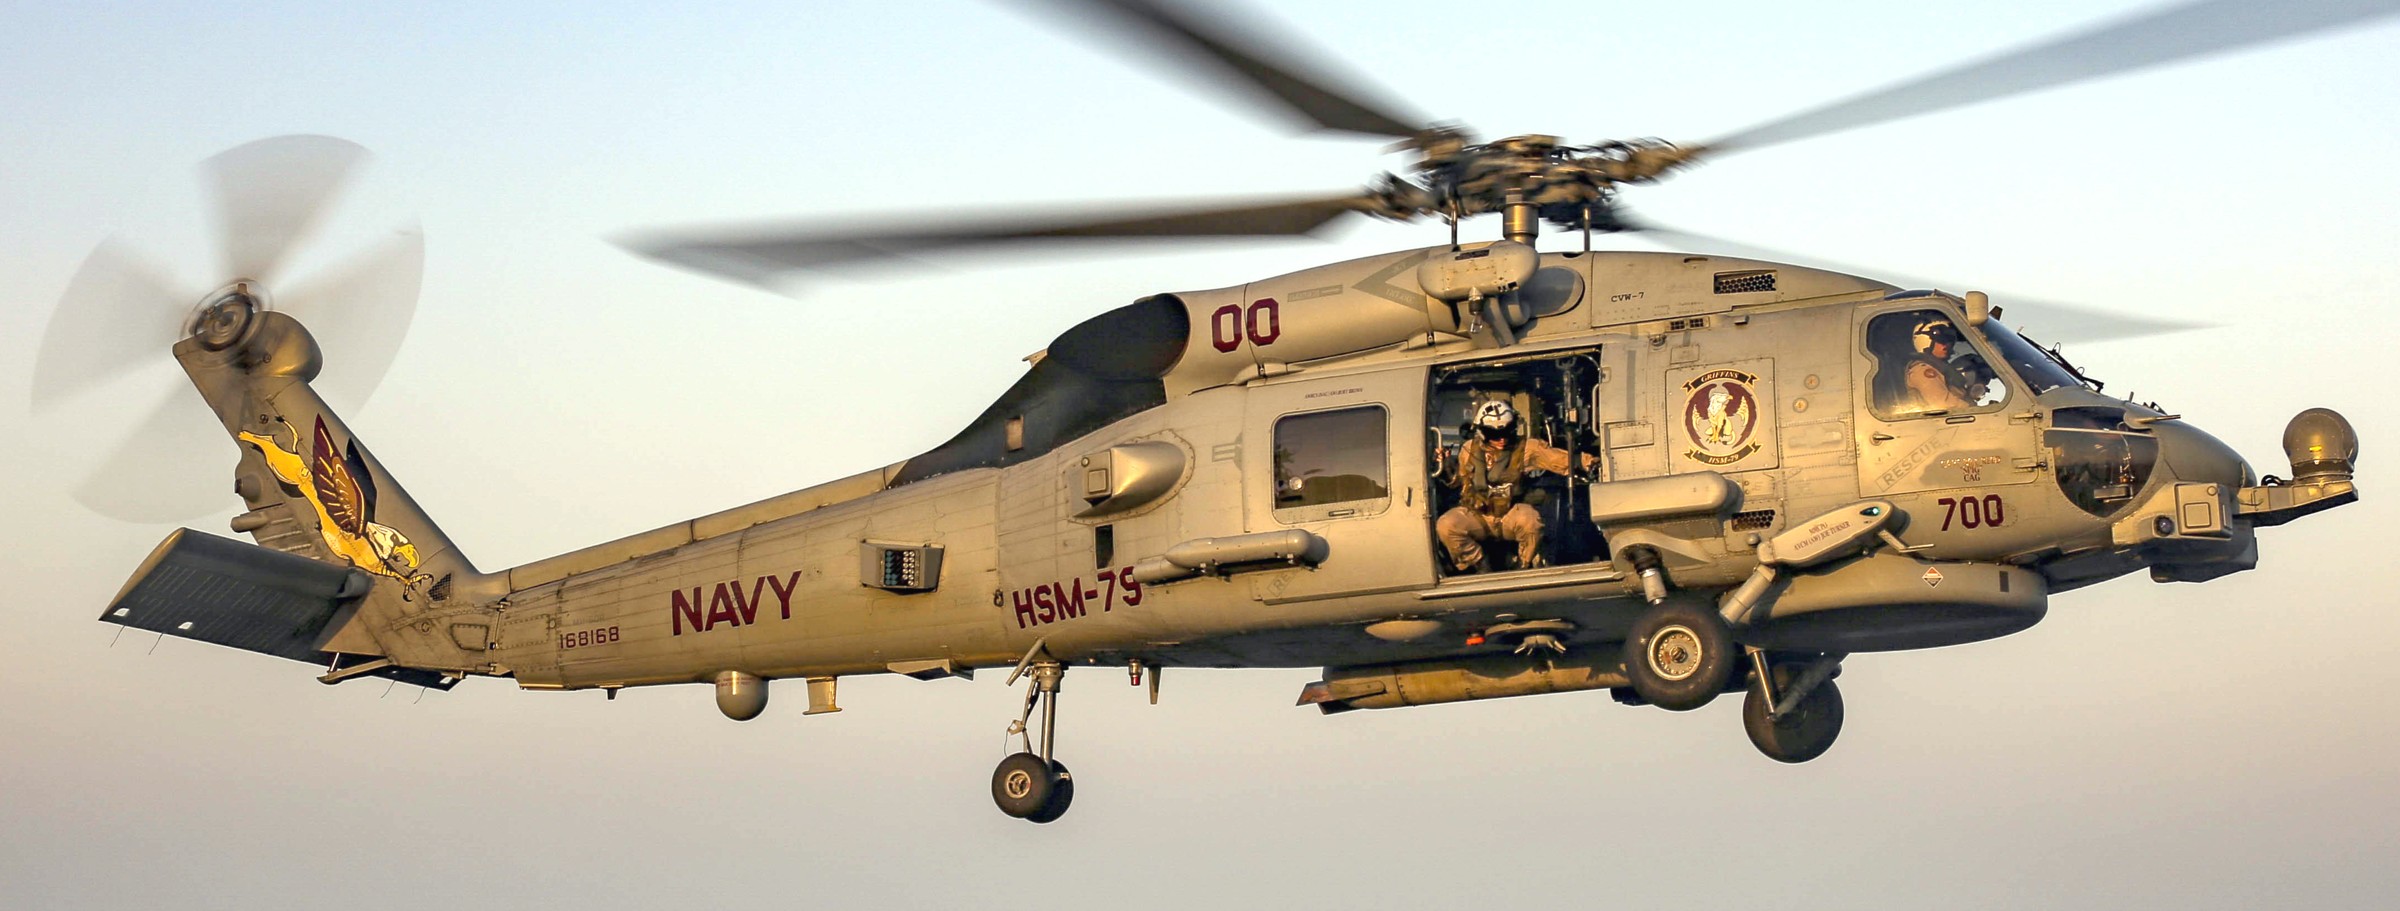 hsm-79 griffins helicopter maritime strike squadron mh-60r seahawk cvw-7 cvn-72 uss abraham lincoln 24